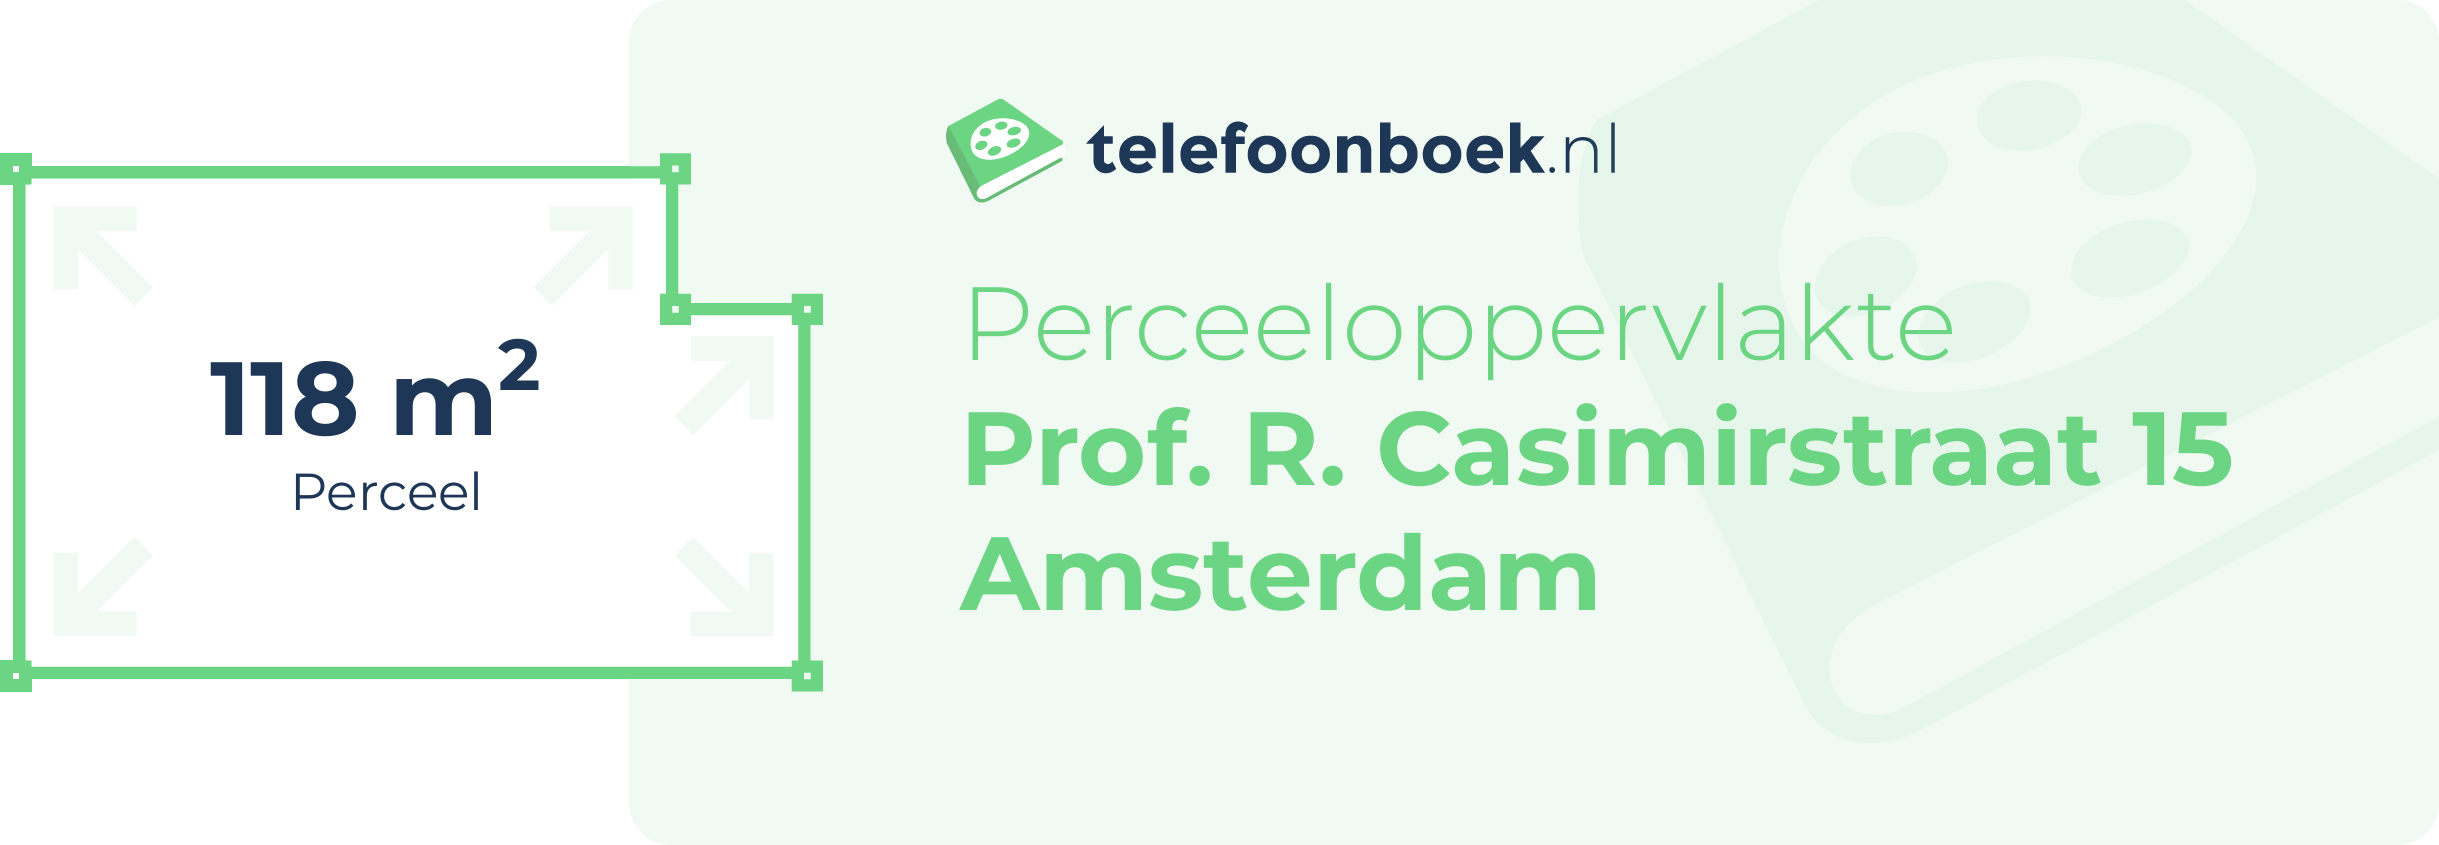 Perceeloppervlakte Prof. R. Casimirstraat 15 Amsterdam